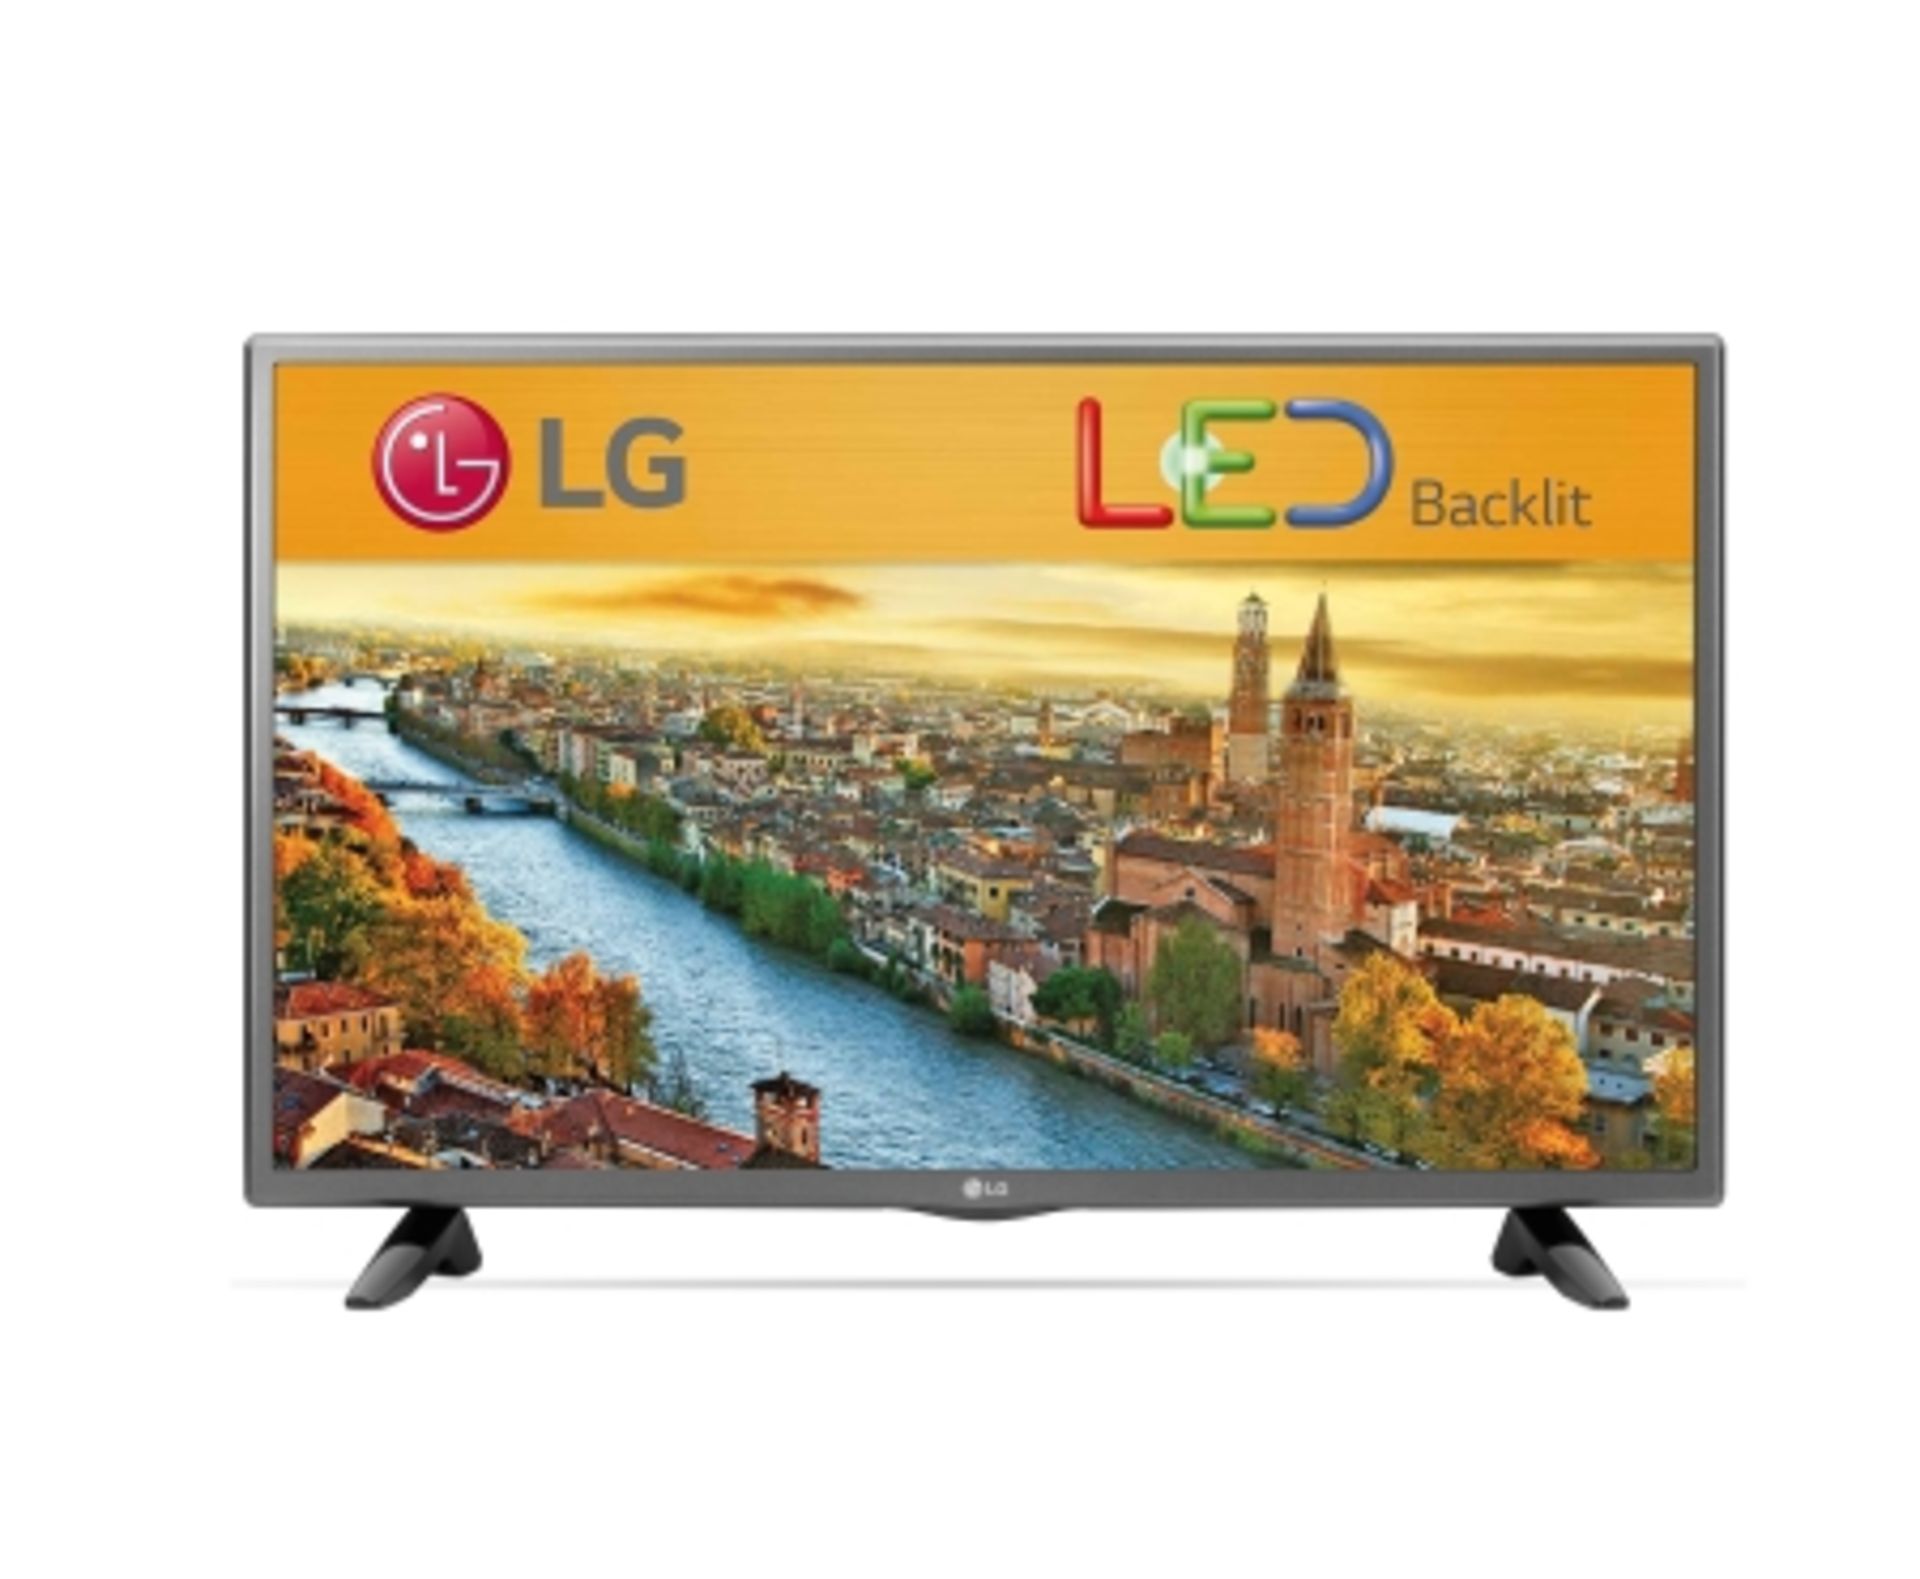 V Grade A LG 32" LED TV With Freeview - Virtual Surround - Triple XD Engine - DivX HD - USB 2.0 -